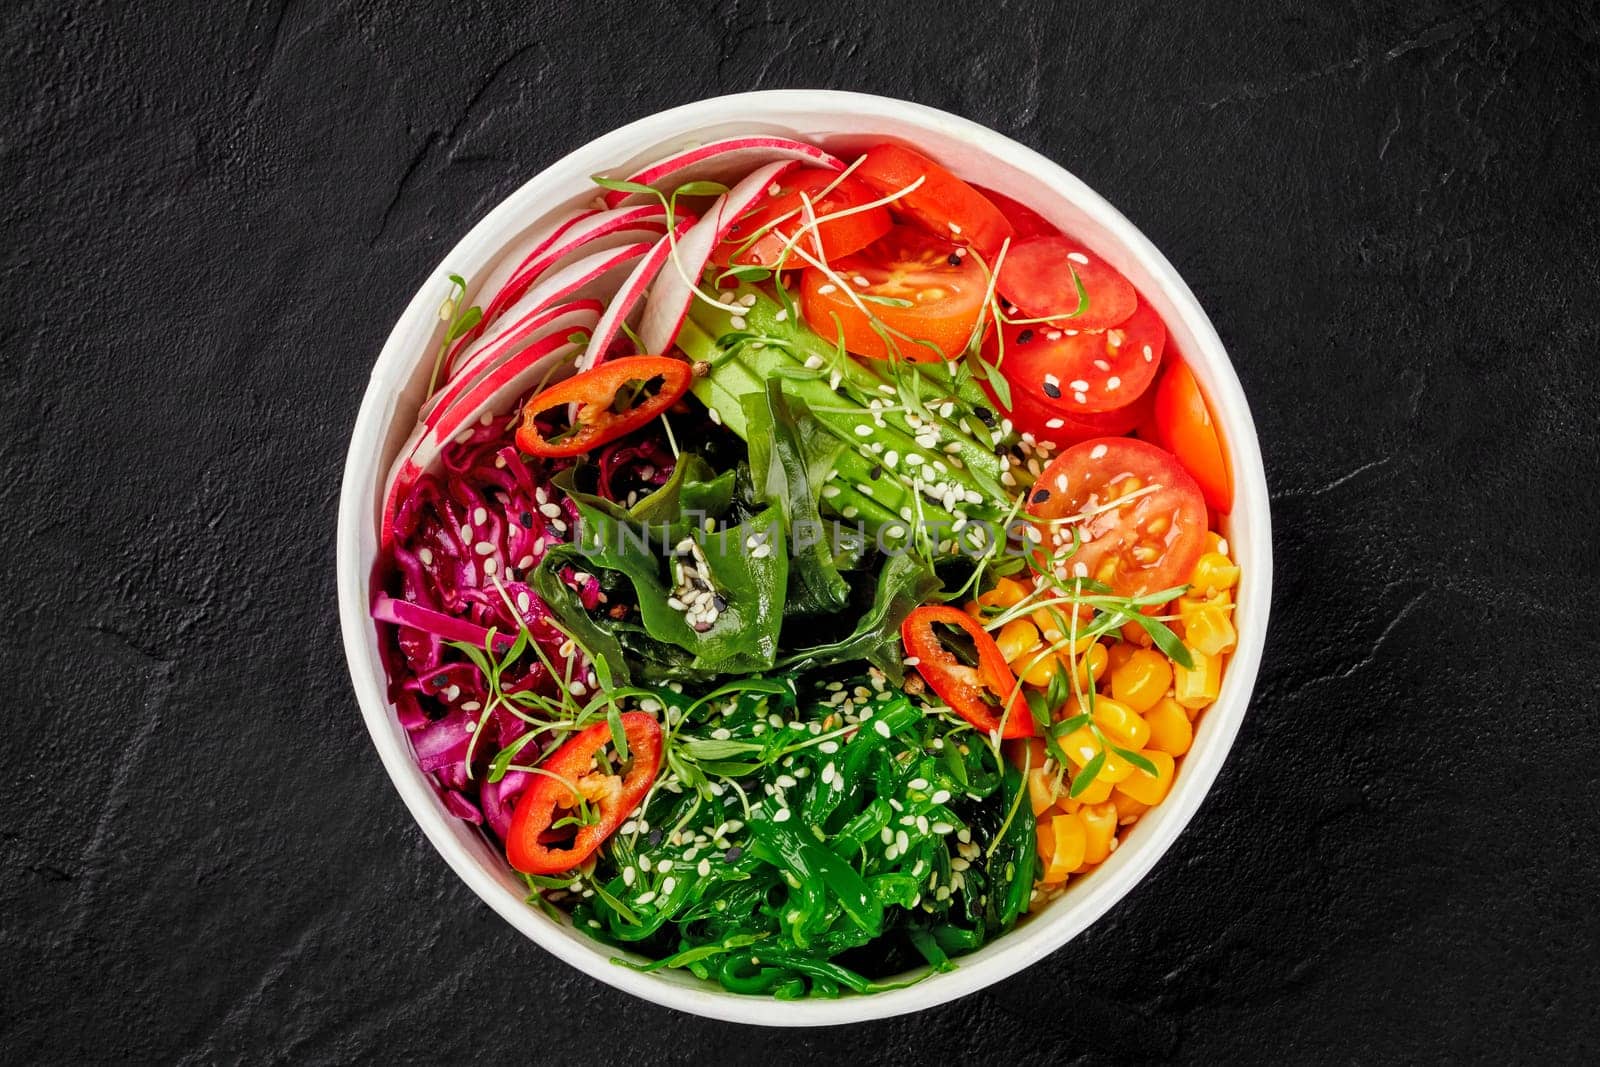 Colorful vegan poke bowl with vegetables, seaweed, and sesame by nazarovsergey